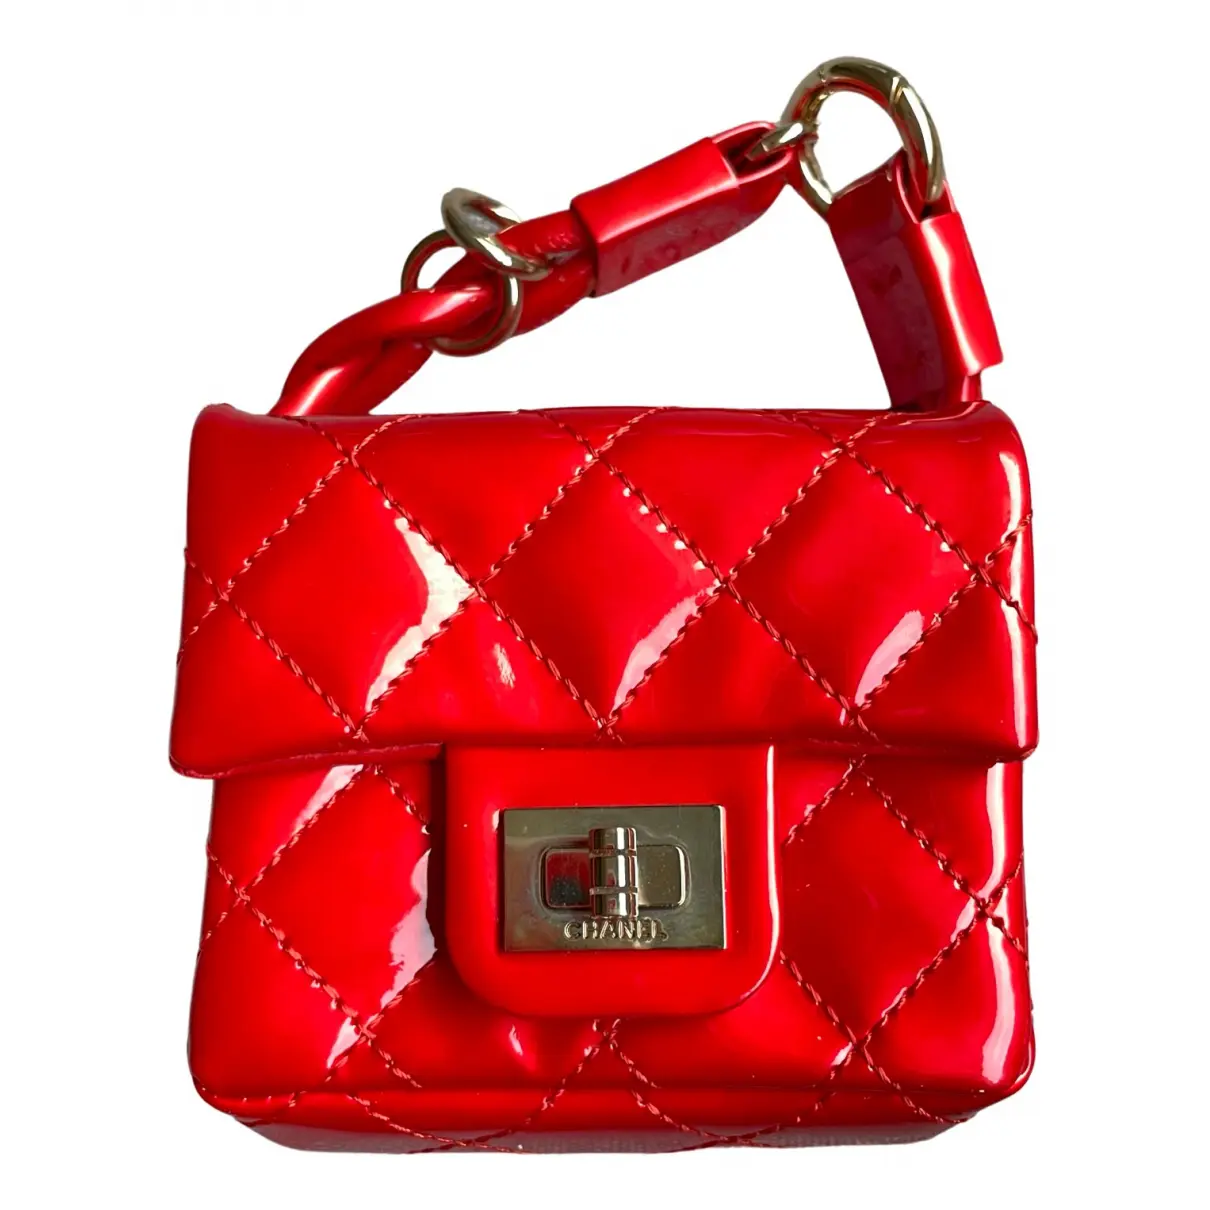 Patent leather mini bag Chanel - Vintage